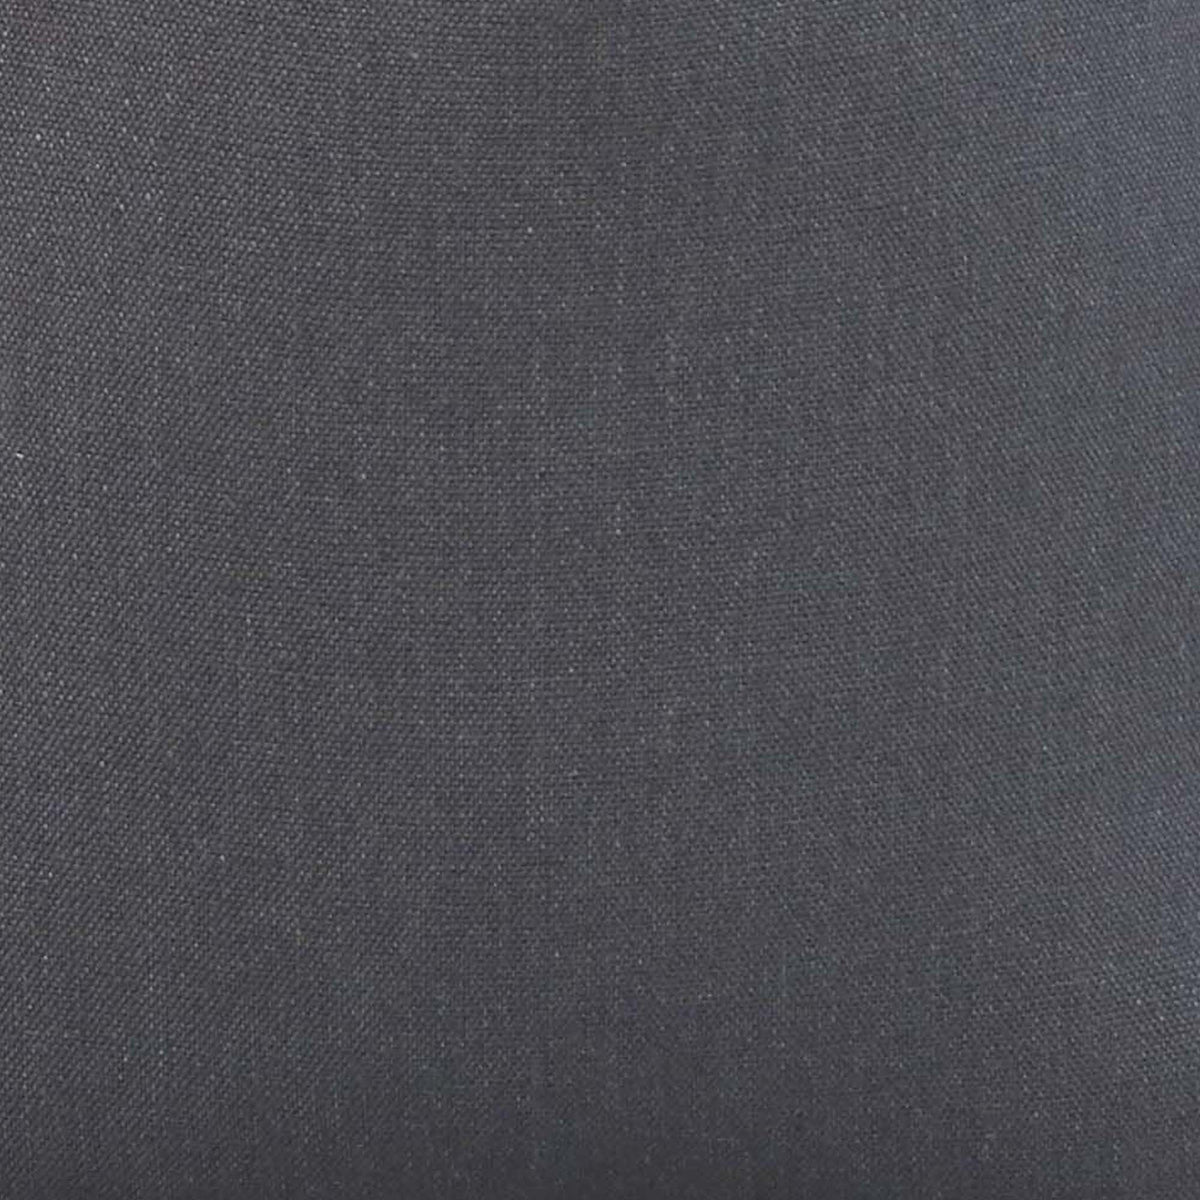 Tay Beige / 4x4 inch Fabric Swatch